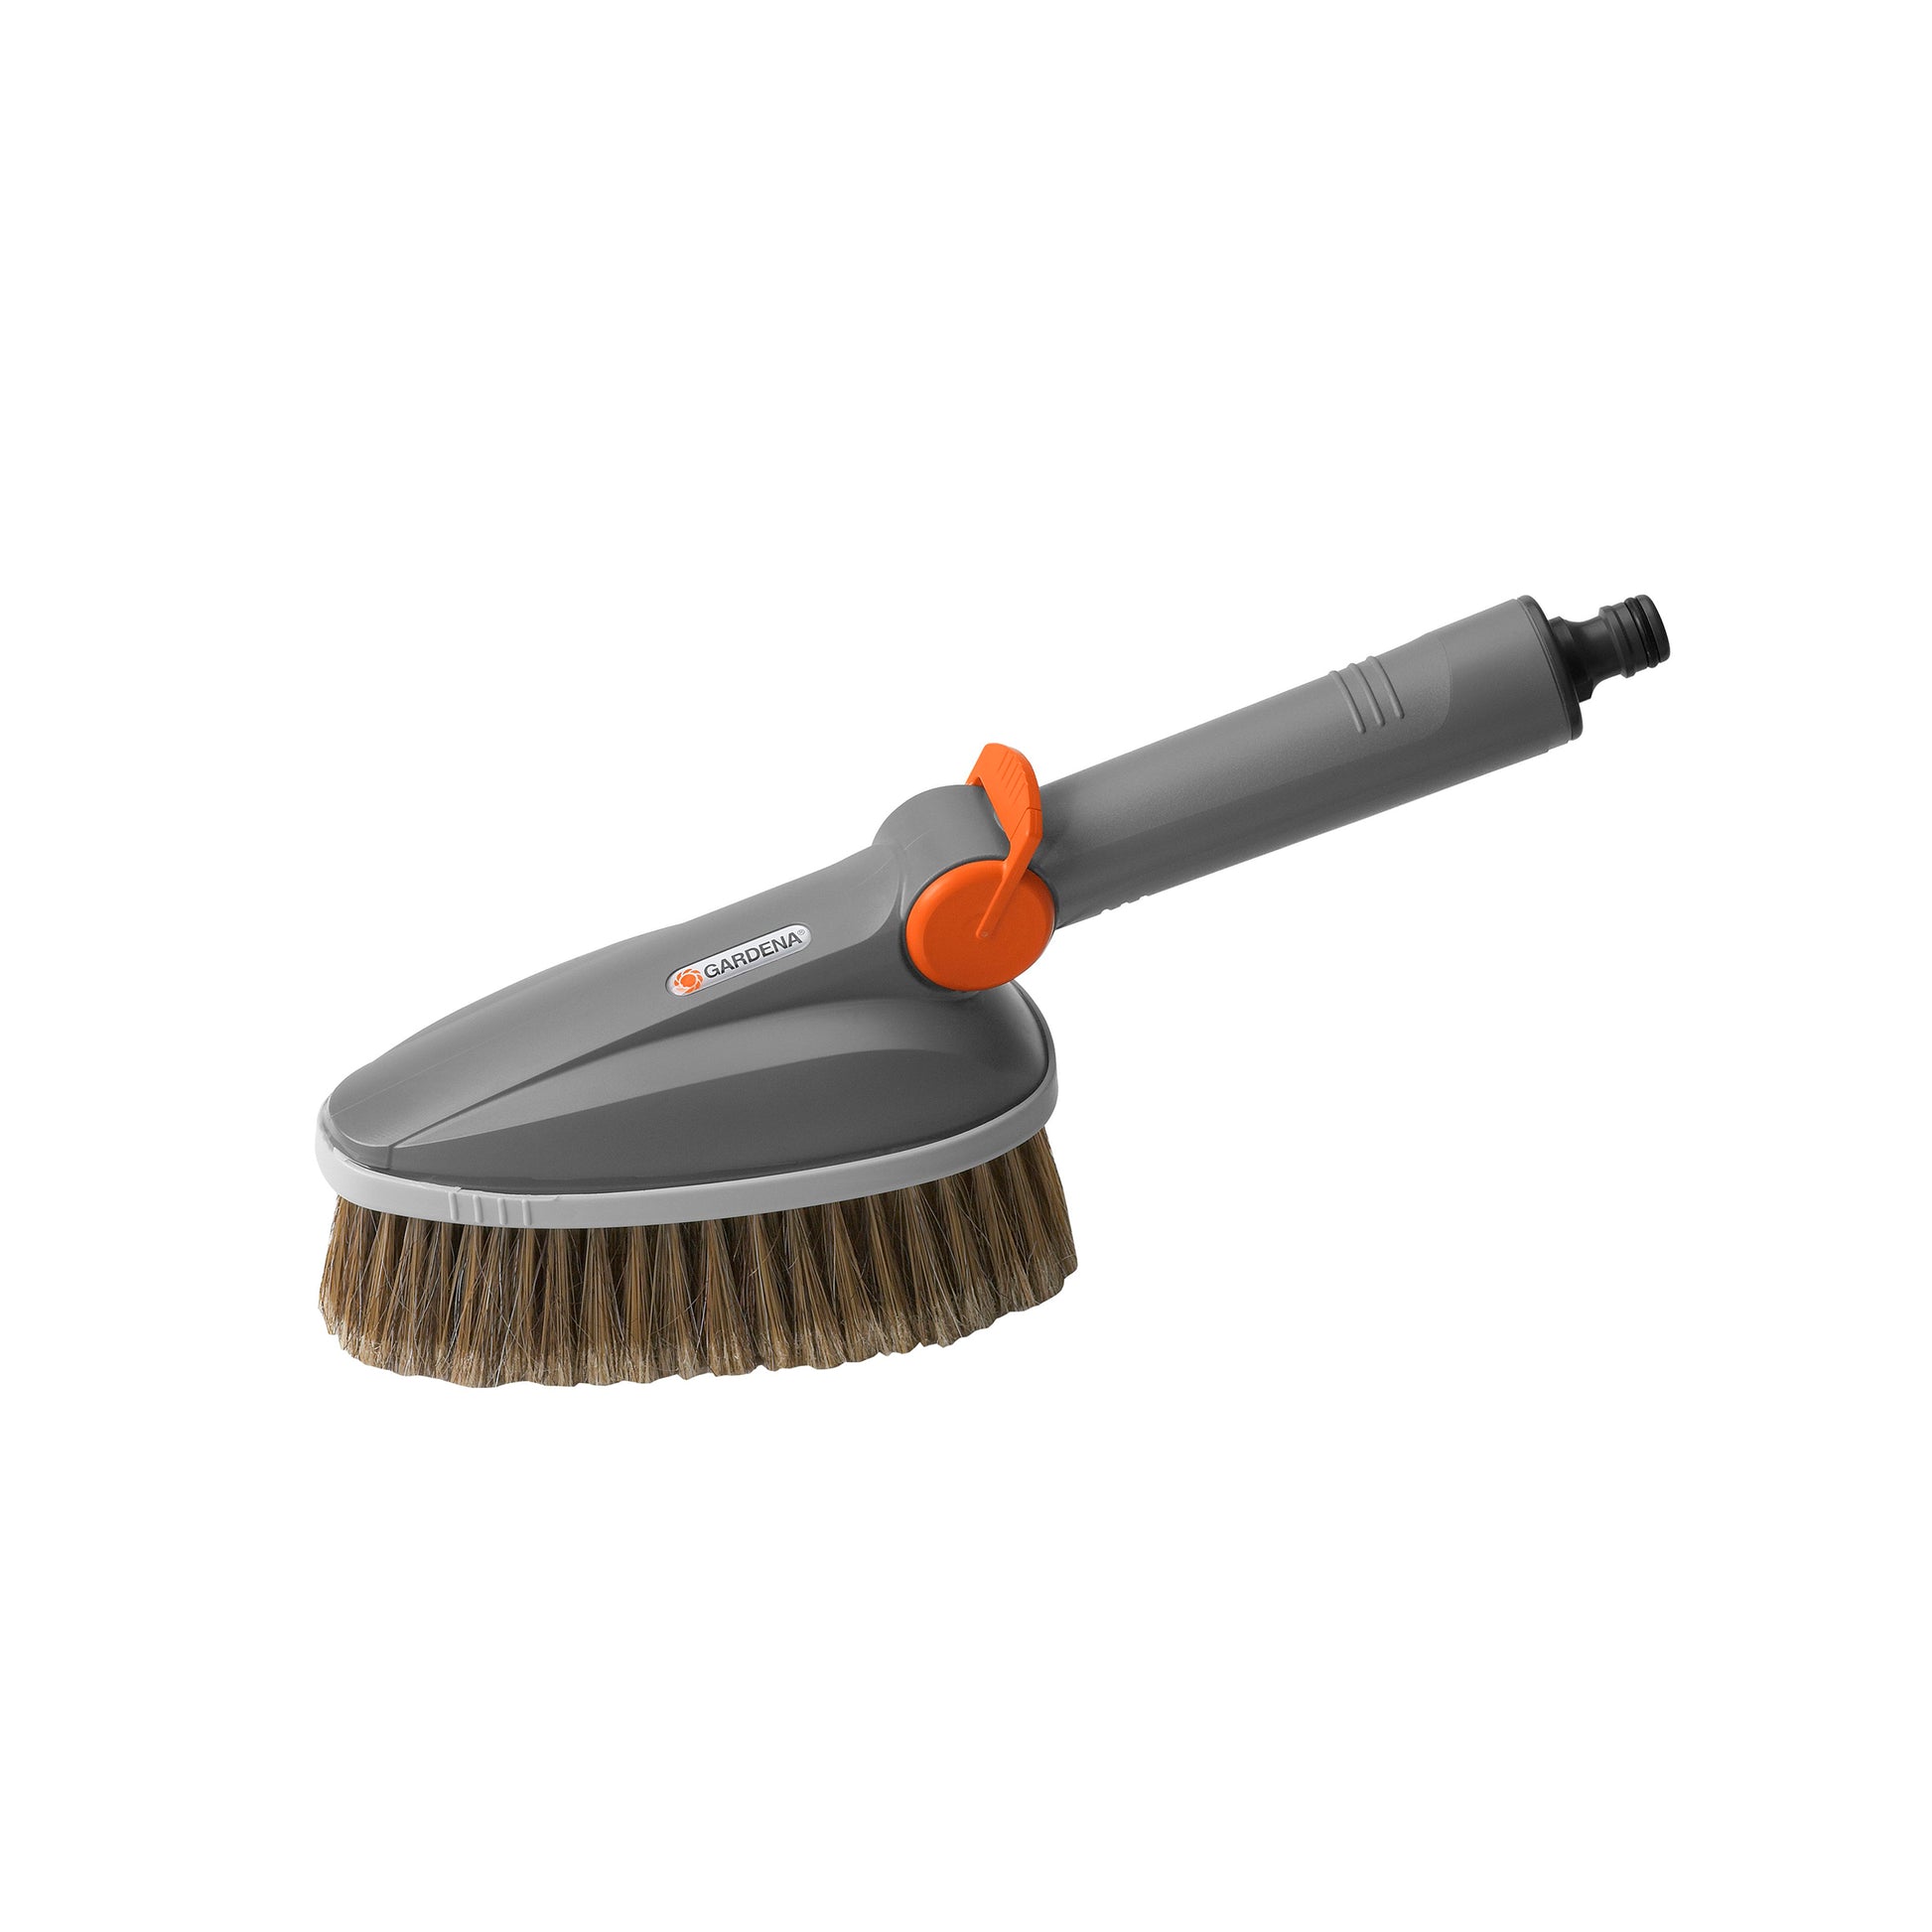 Gardena Wash Brush Cleansystem